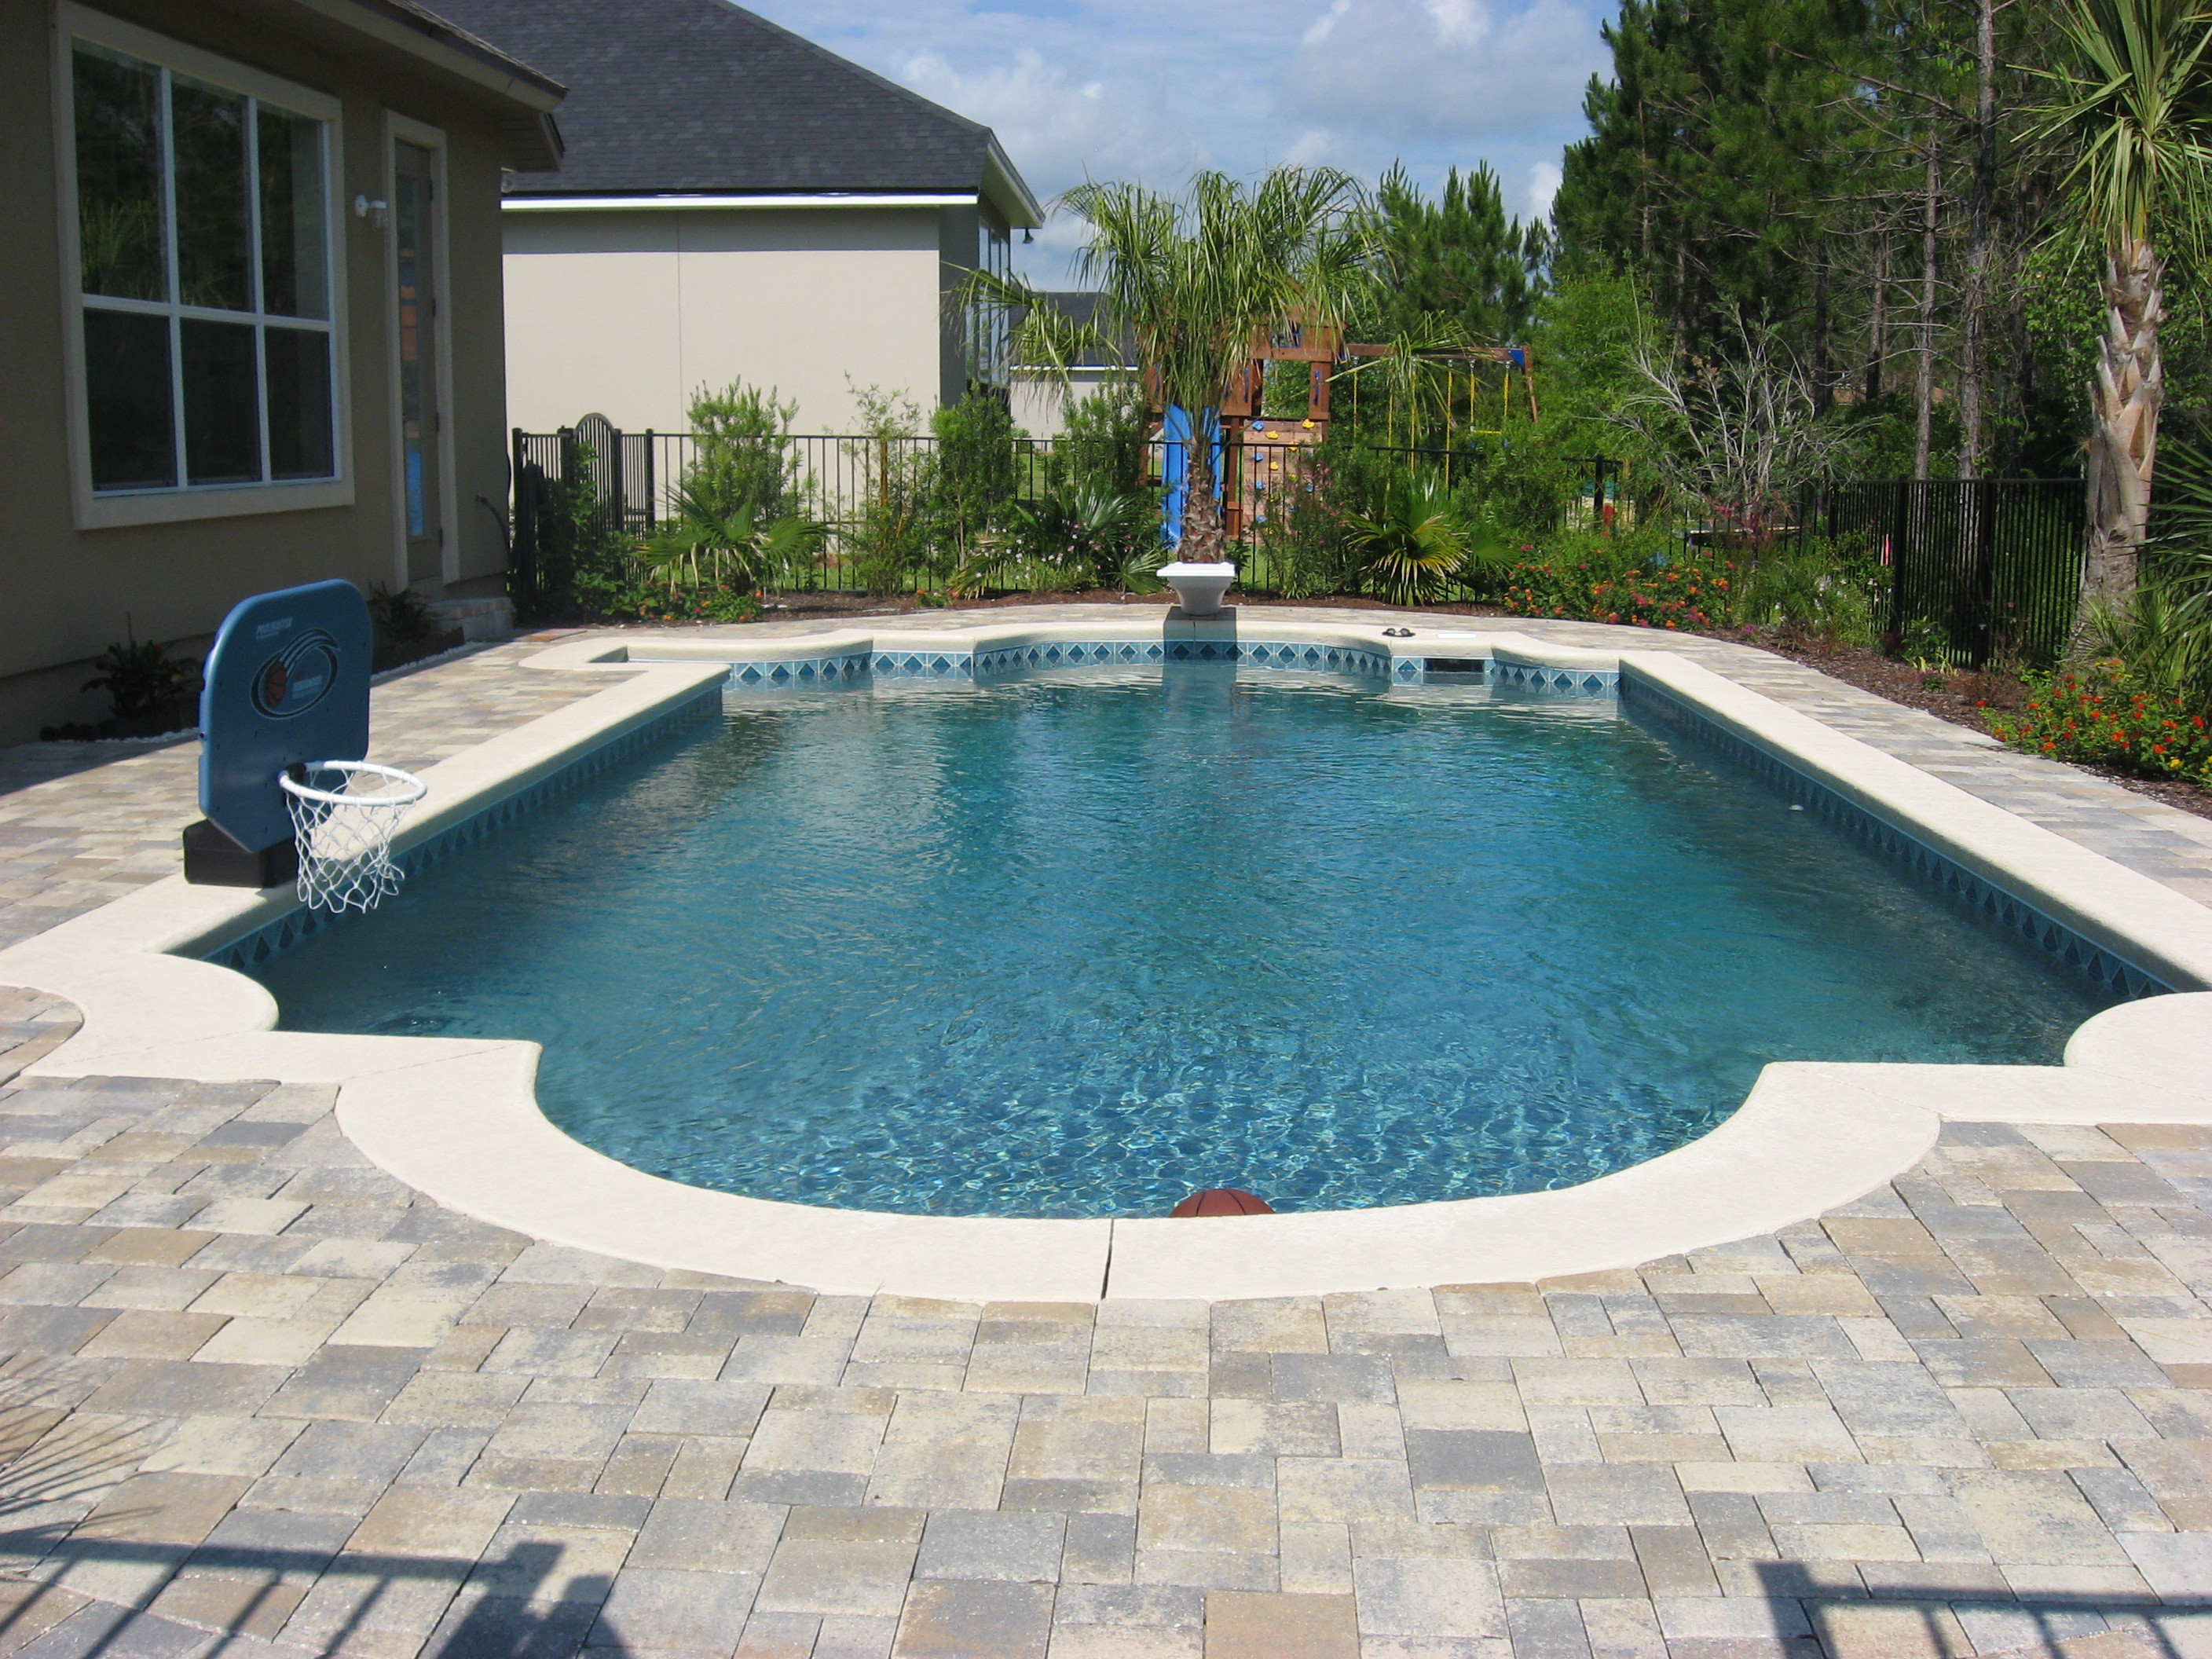 Best ideas about Fiberglass Inground Pool
. Save or Pin Fiberglass Pools Jacksonville FL – Jacksonville Pool Builder Now.